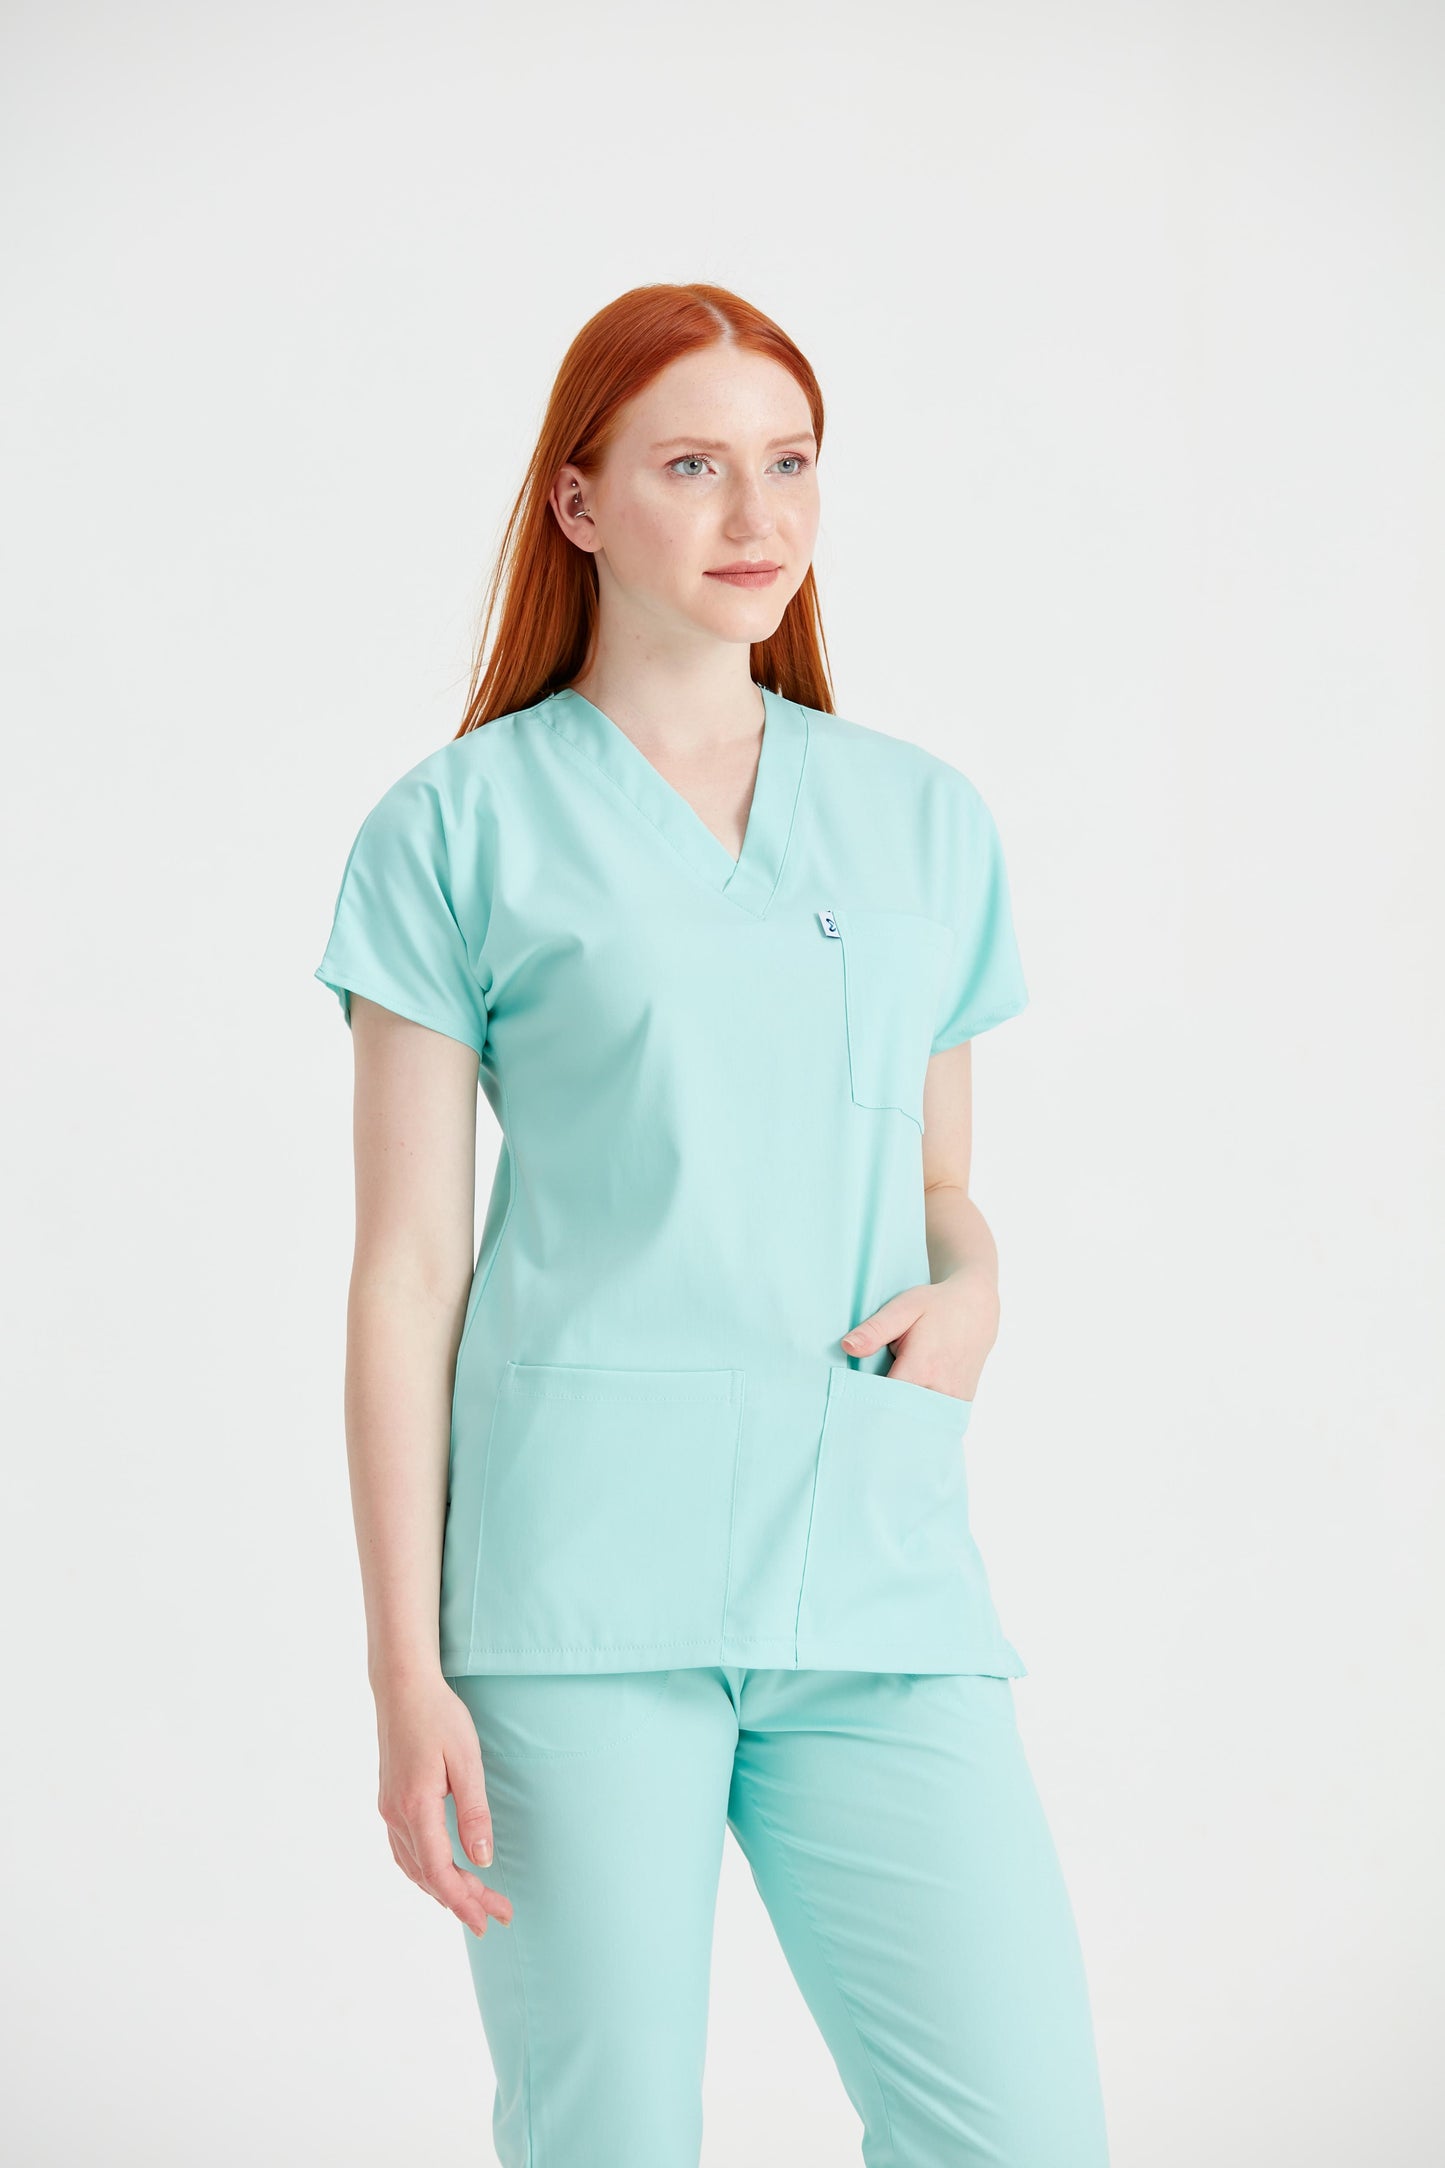 Mint Green Medical Suit, For Women - Mint - Classic Model